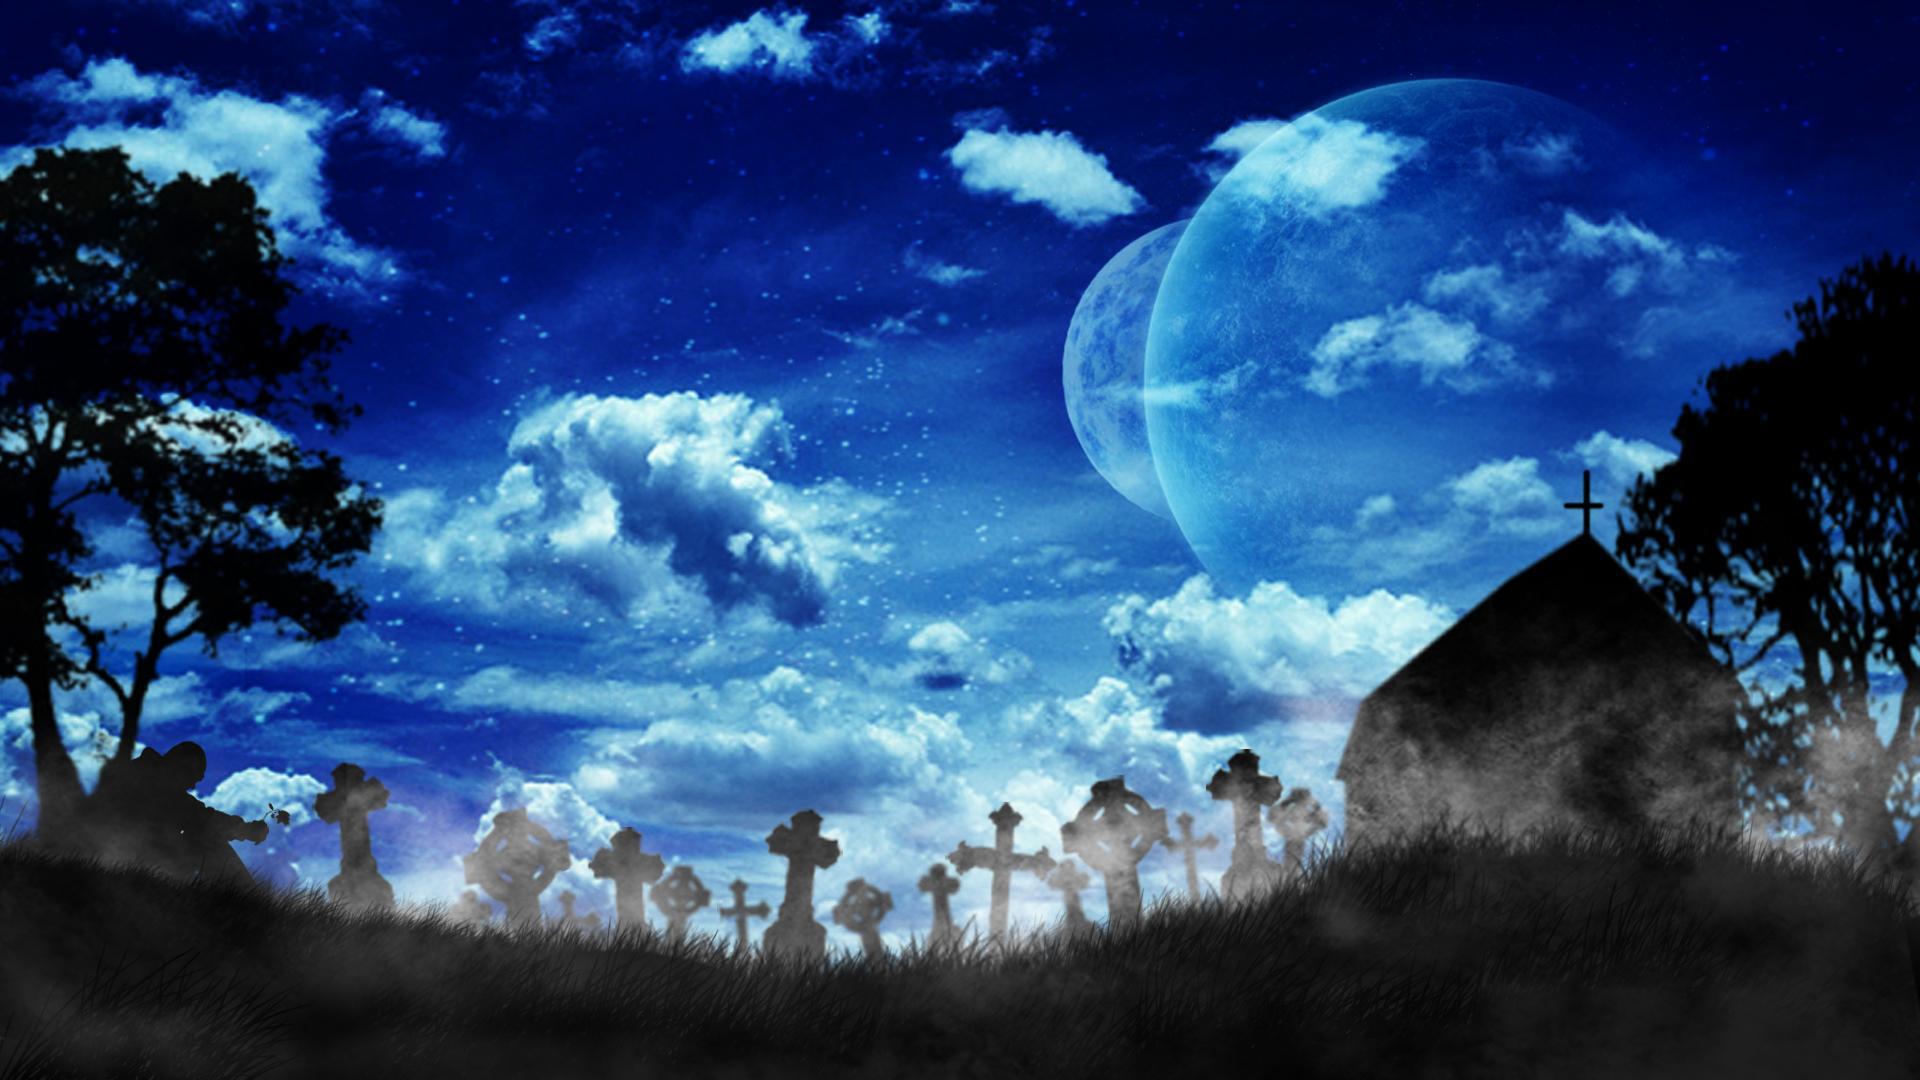 dark, cemetery, blue, church, cloud, cross, fantasy, gravestone, planet, silhouette, stars, tree